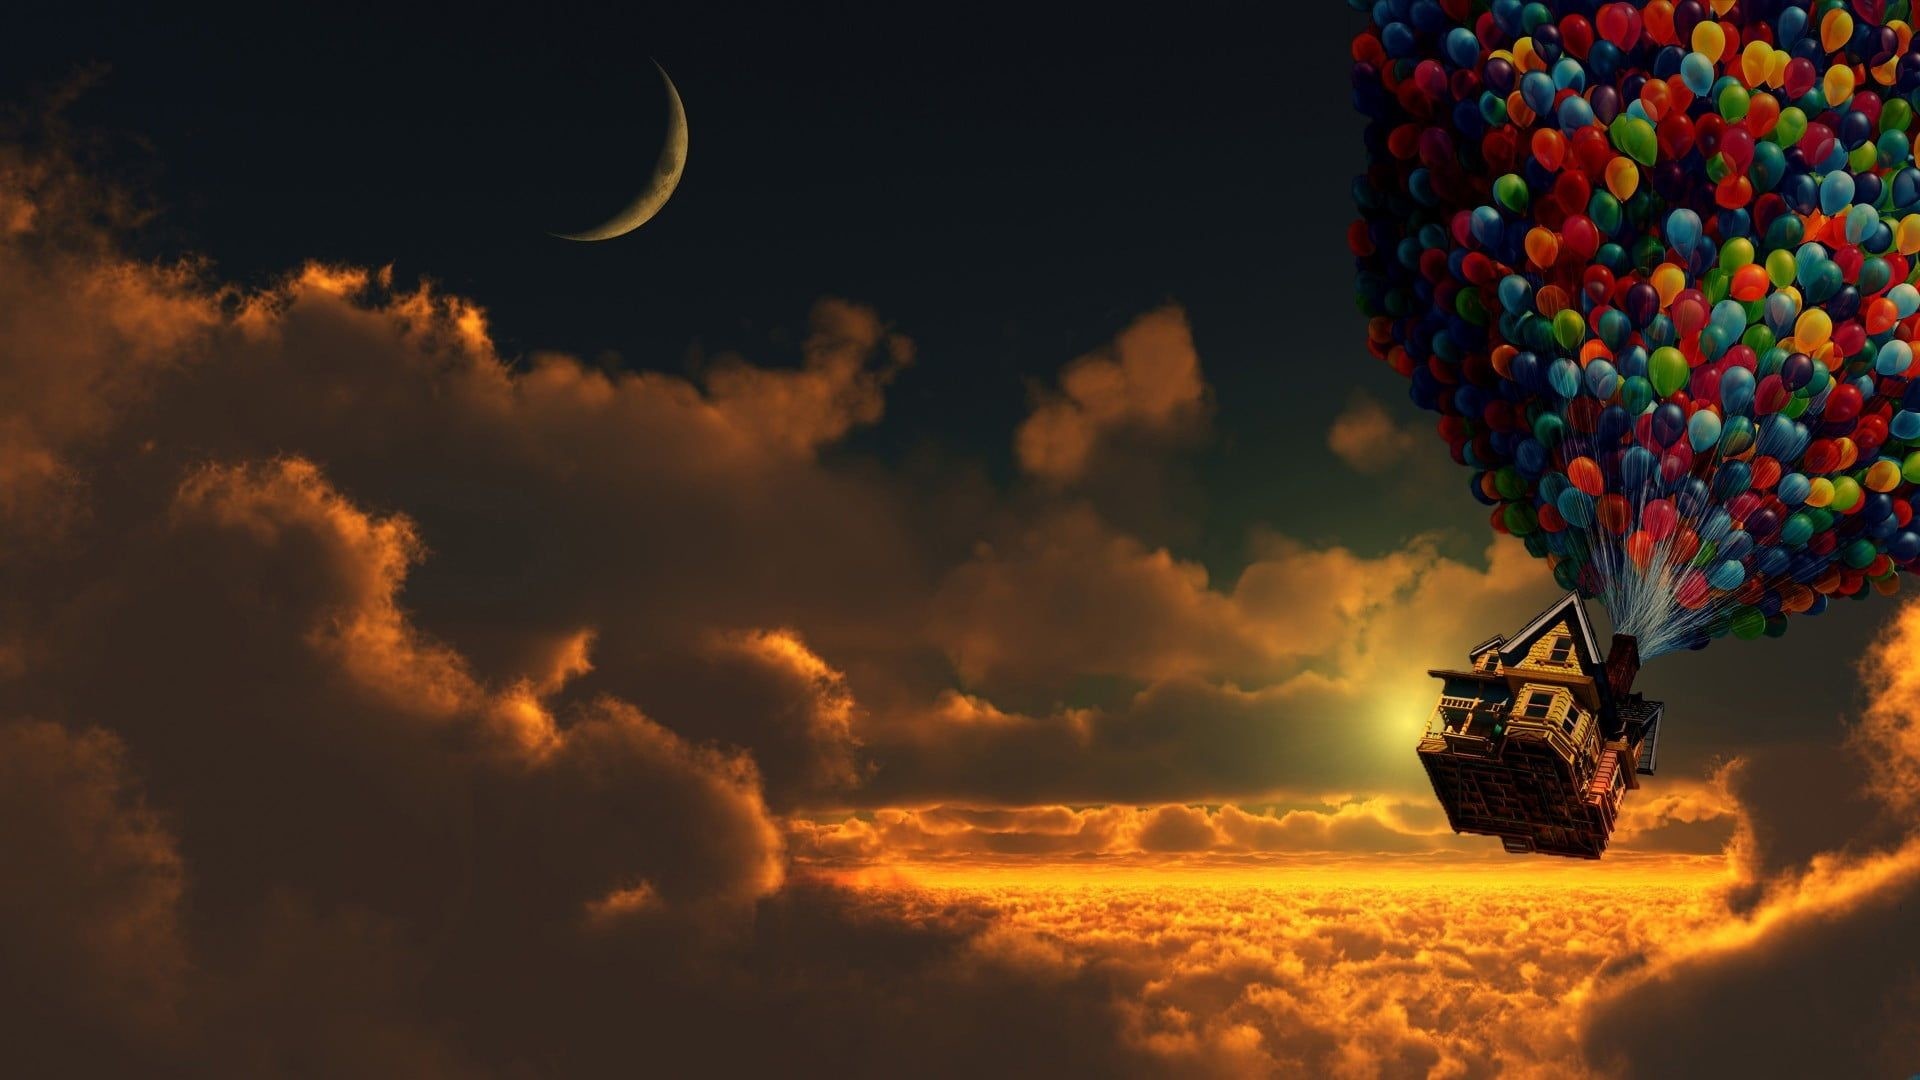 Up Pixar wallpaper, Whimsical balloon journey, Heartwarming animation, Adventurous tale, 1920x1080 Full HD Desktop